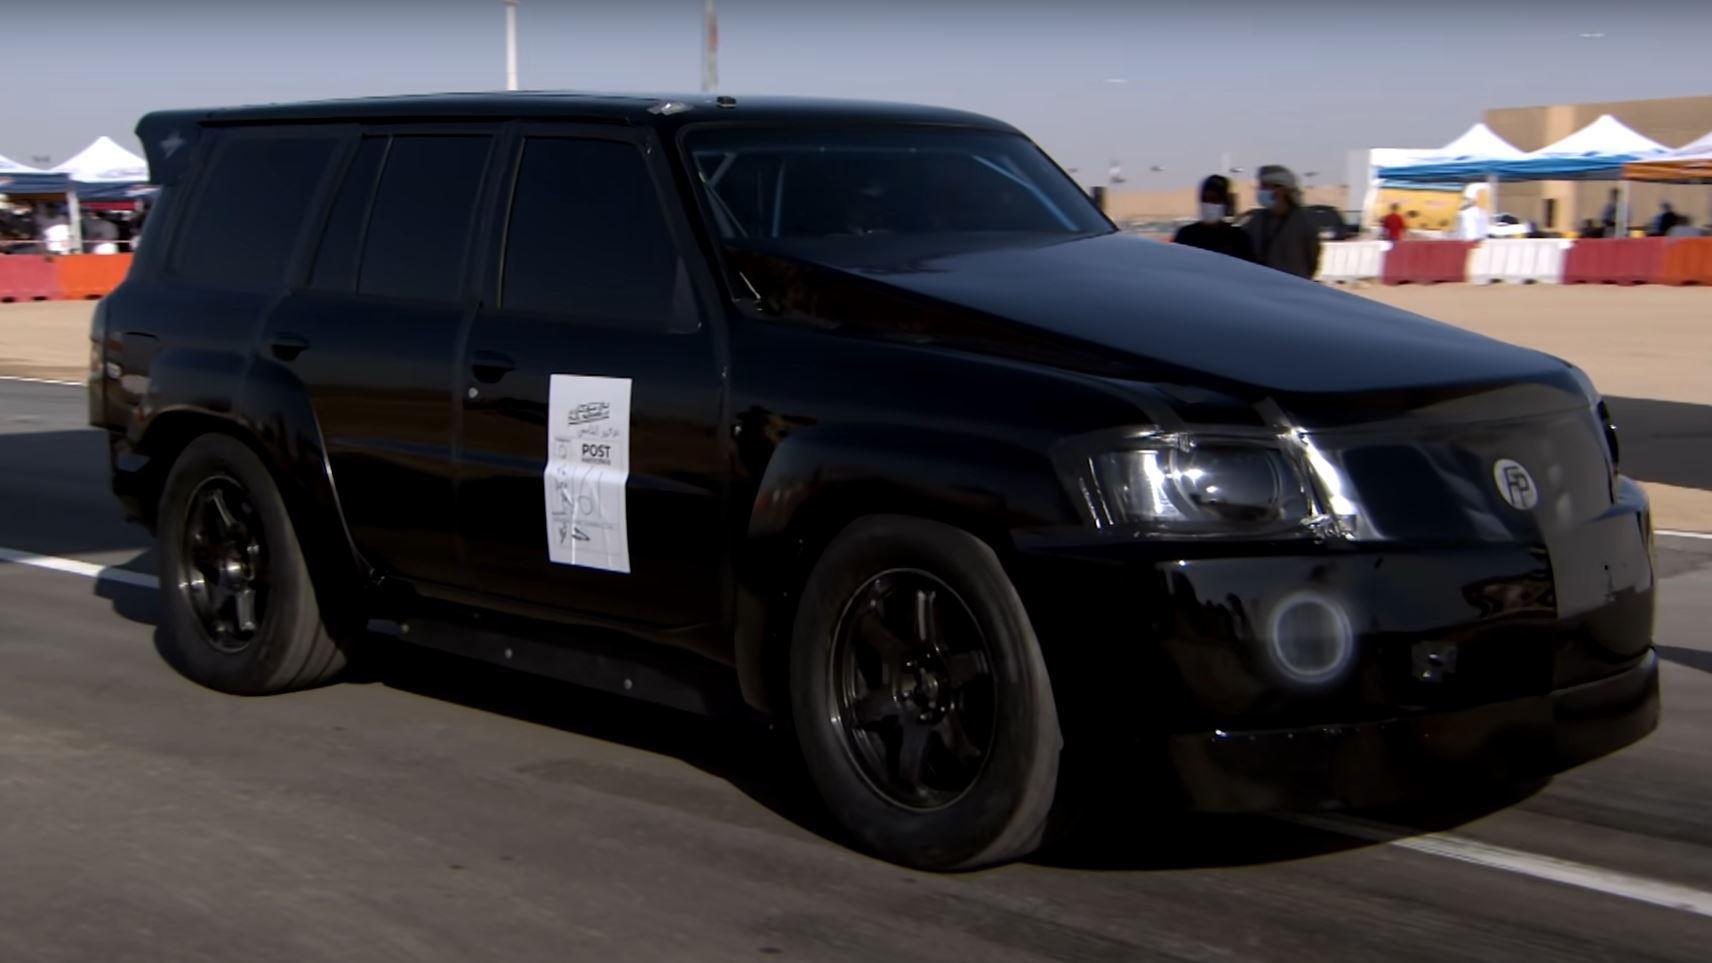 Meet the Fastest SUV in the World: a 2 Door Nissan Patrol - GTspirit